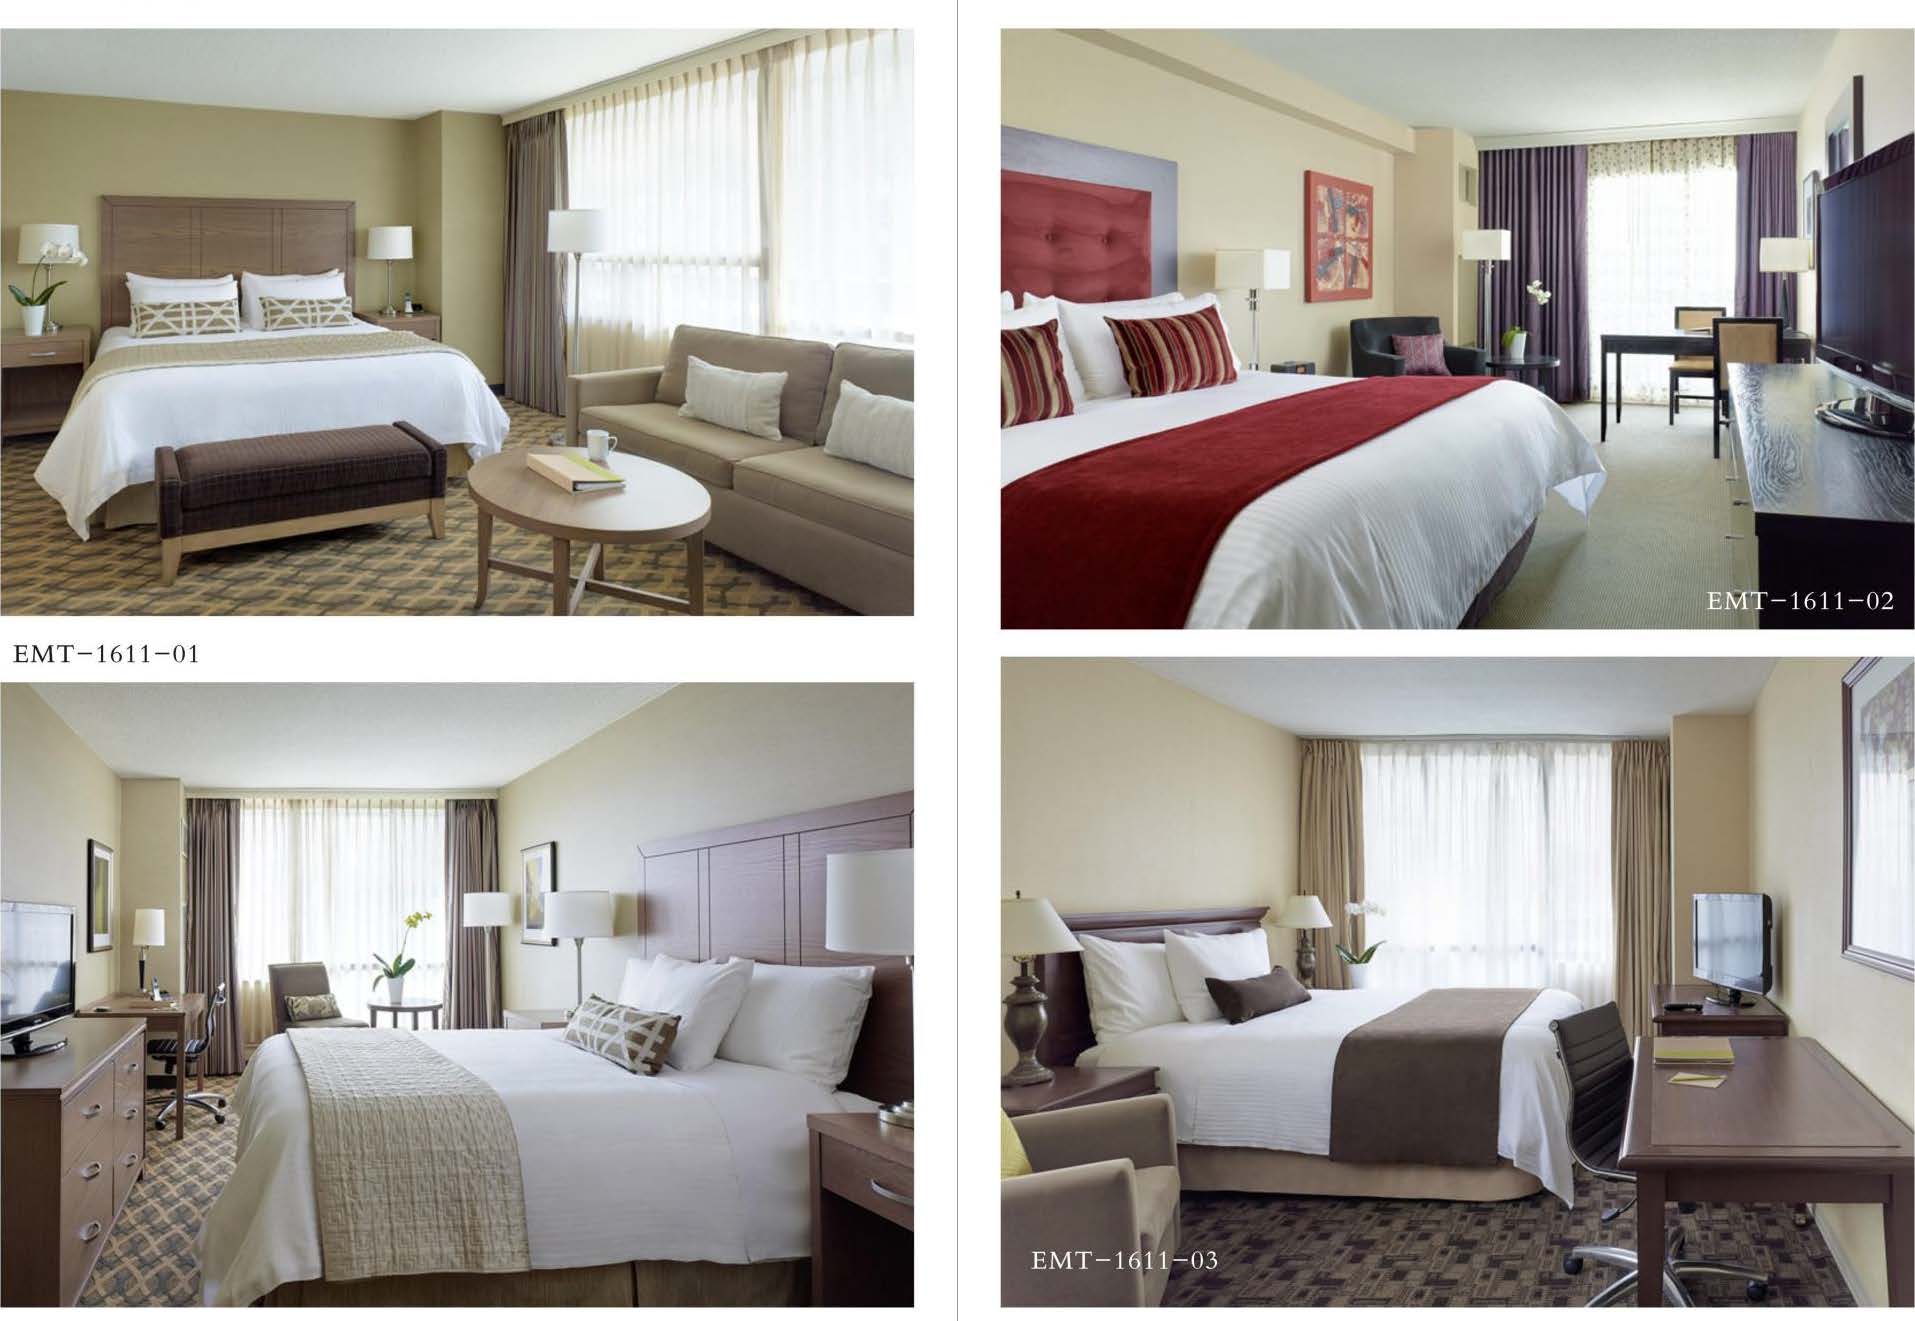 Luxury Hotel Bedroom Furniture Designs